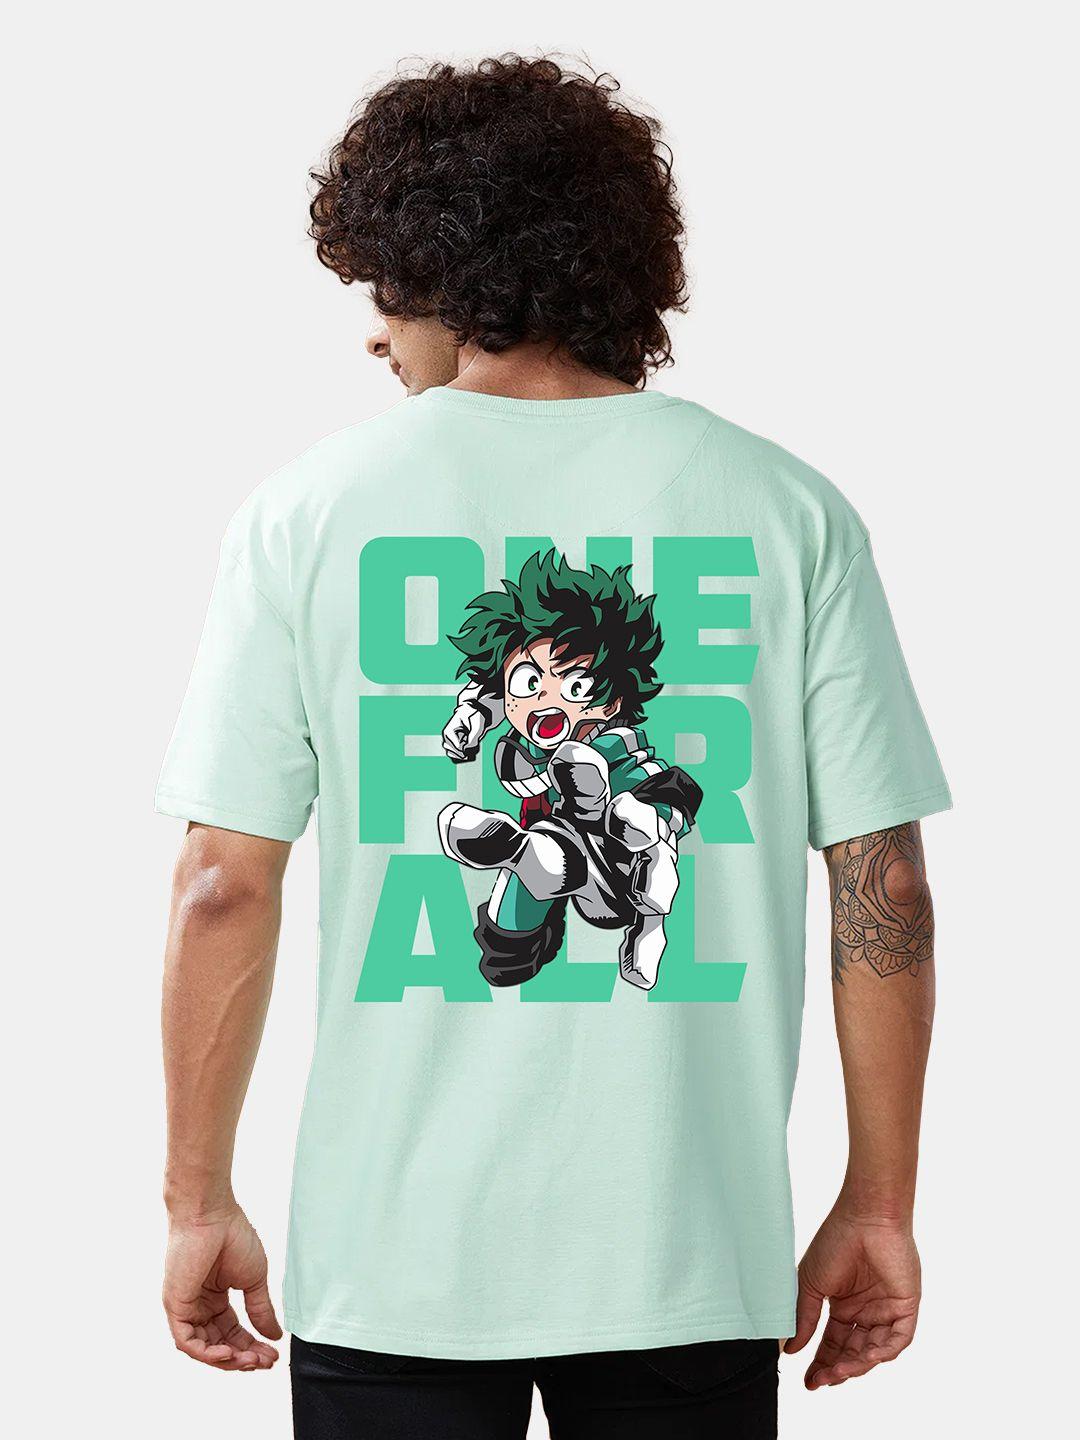 crazymonk unisex green printed applique t-shirt